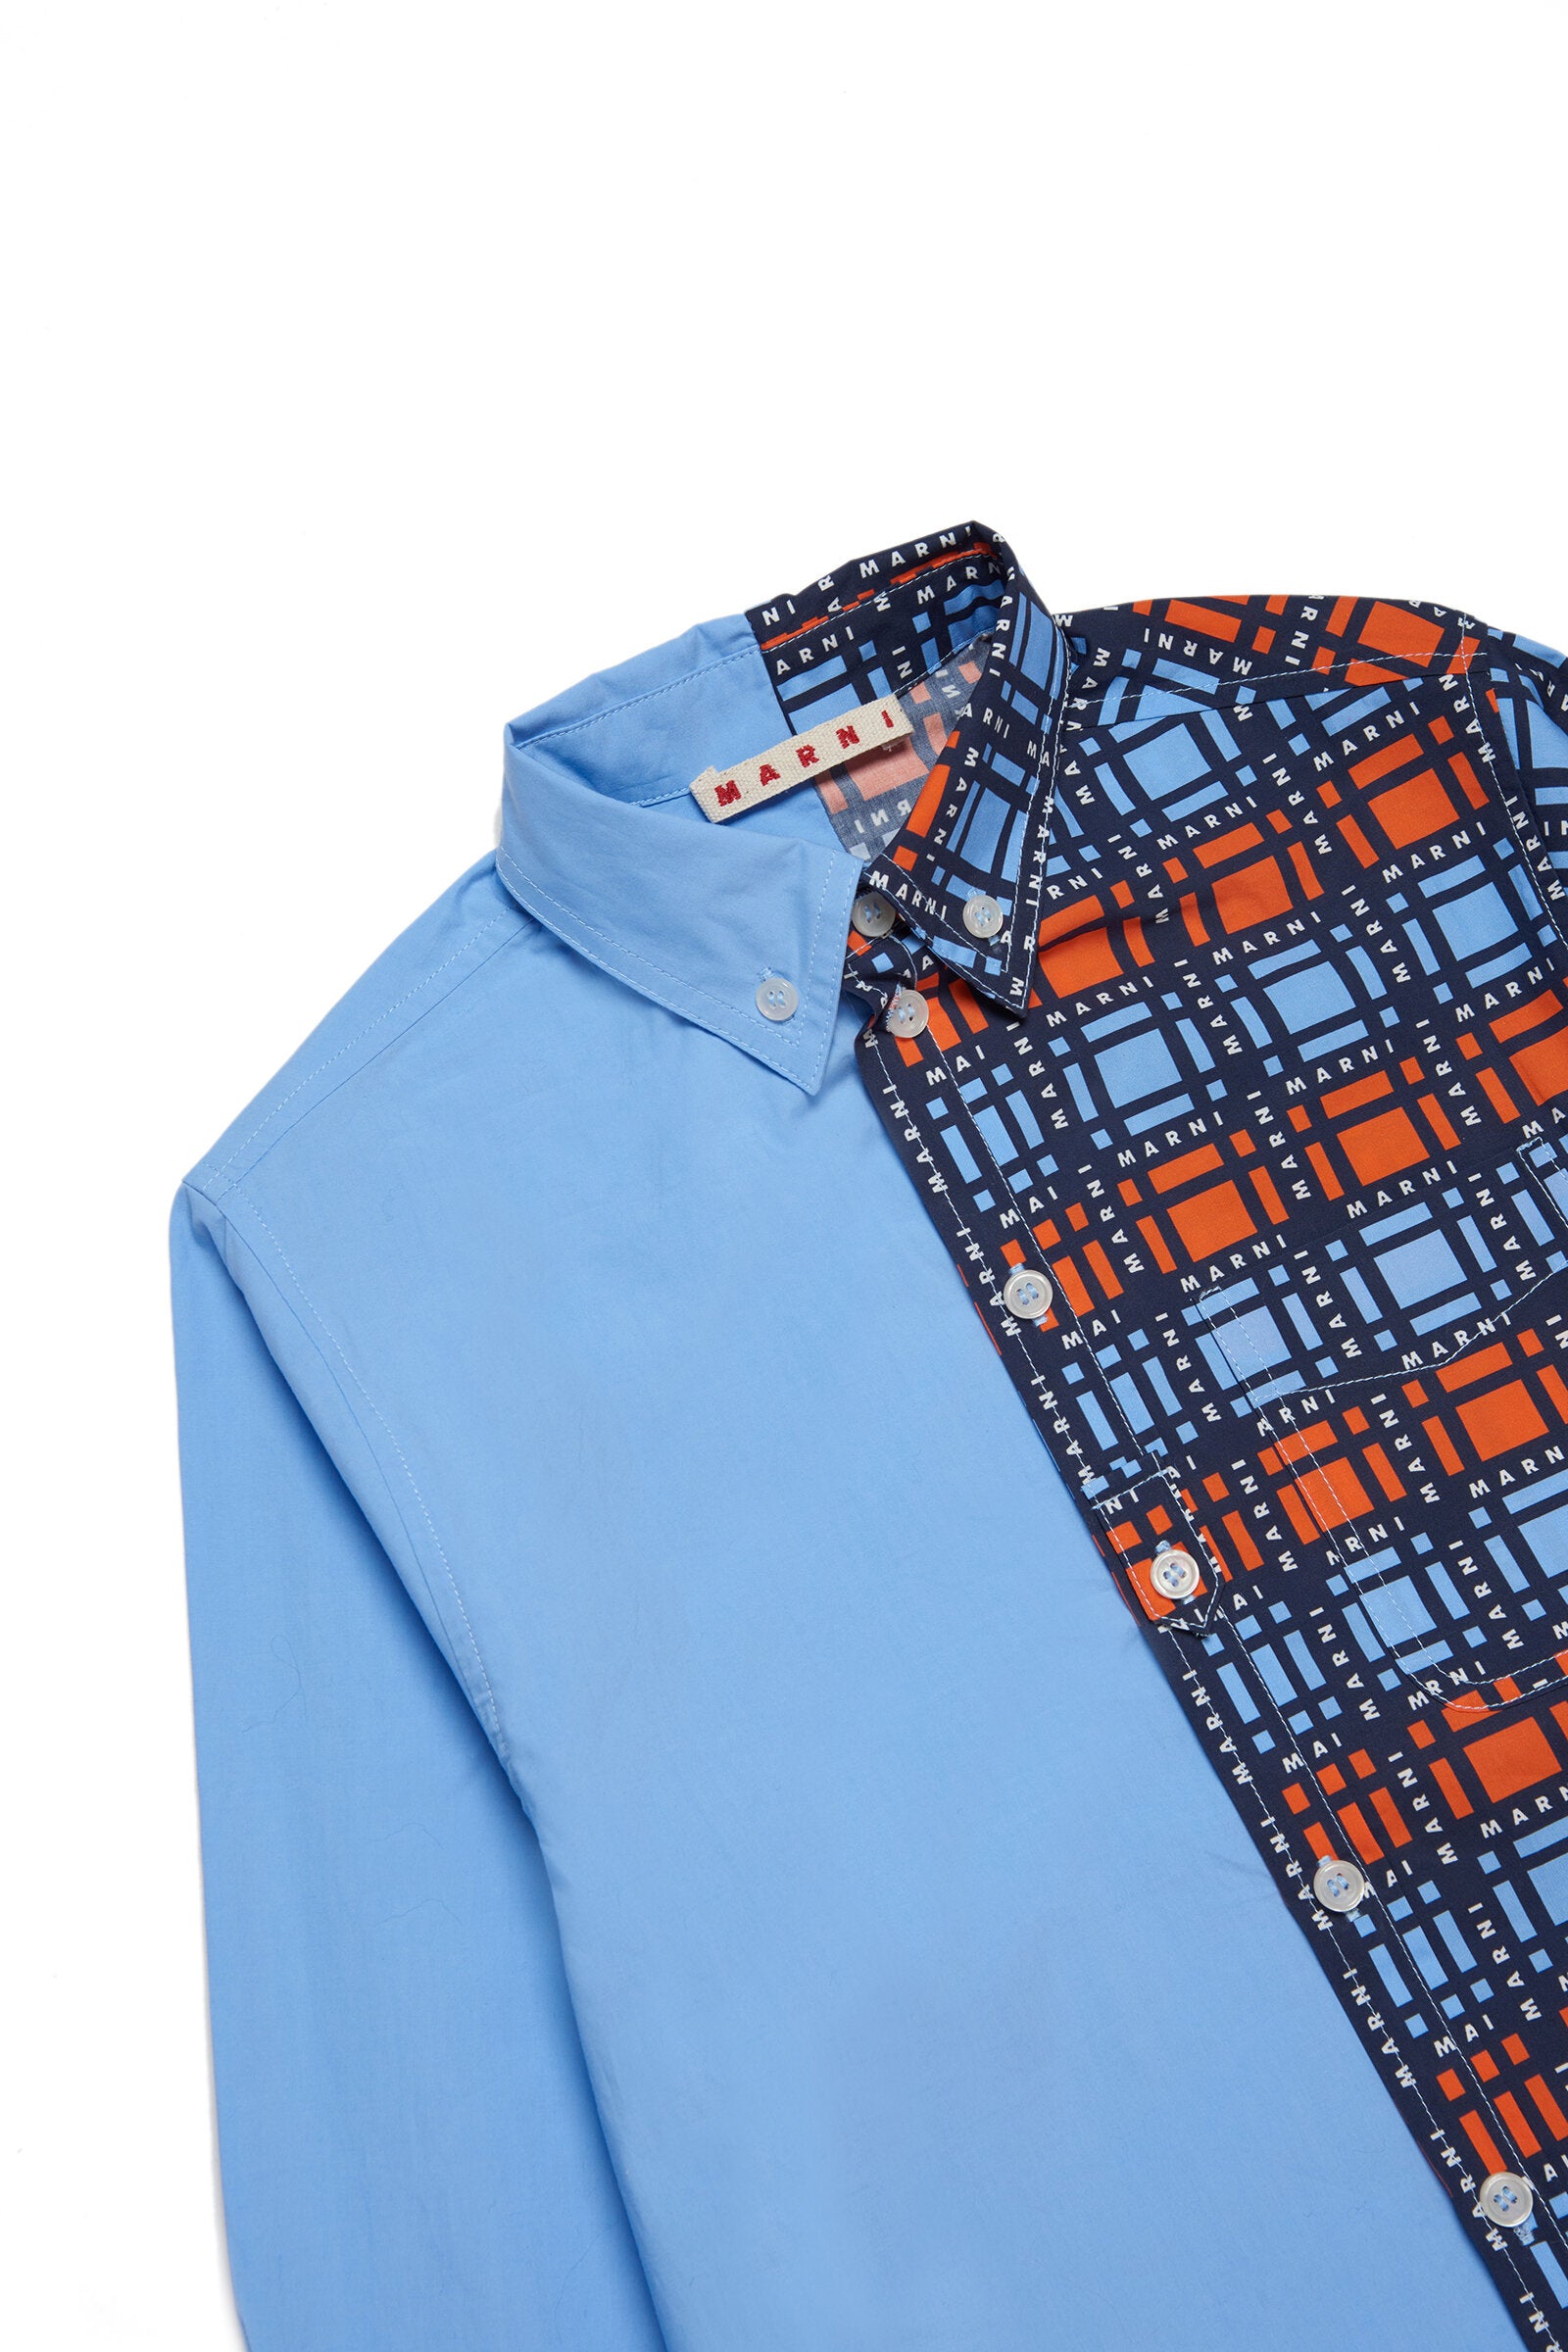 Poplin shirt with Check pattern